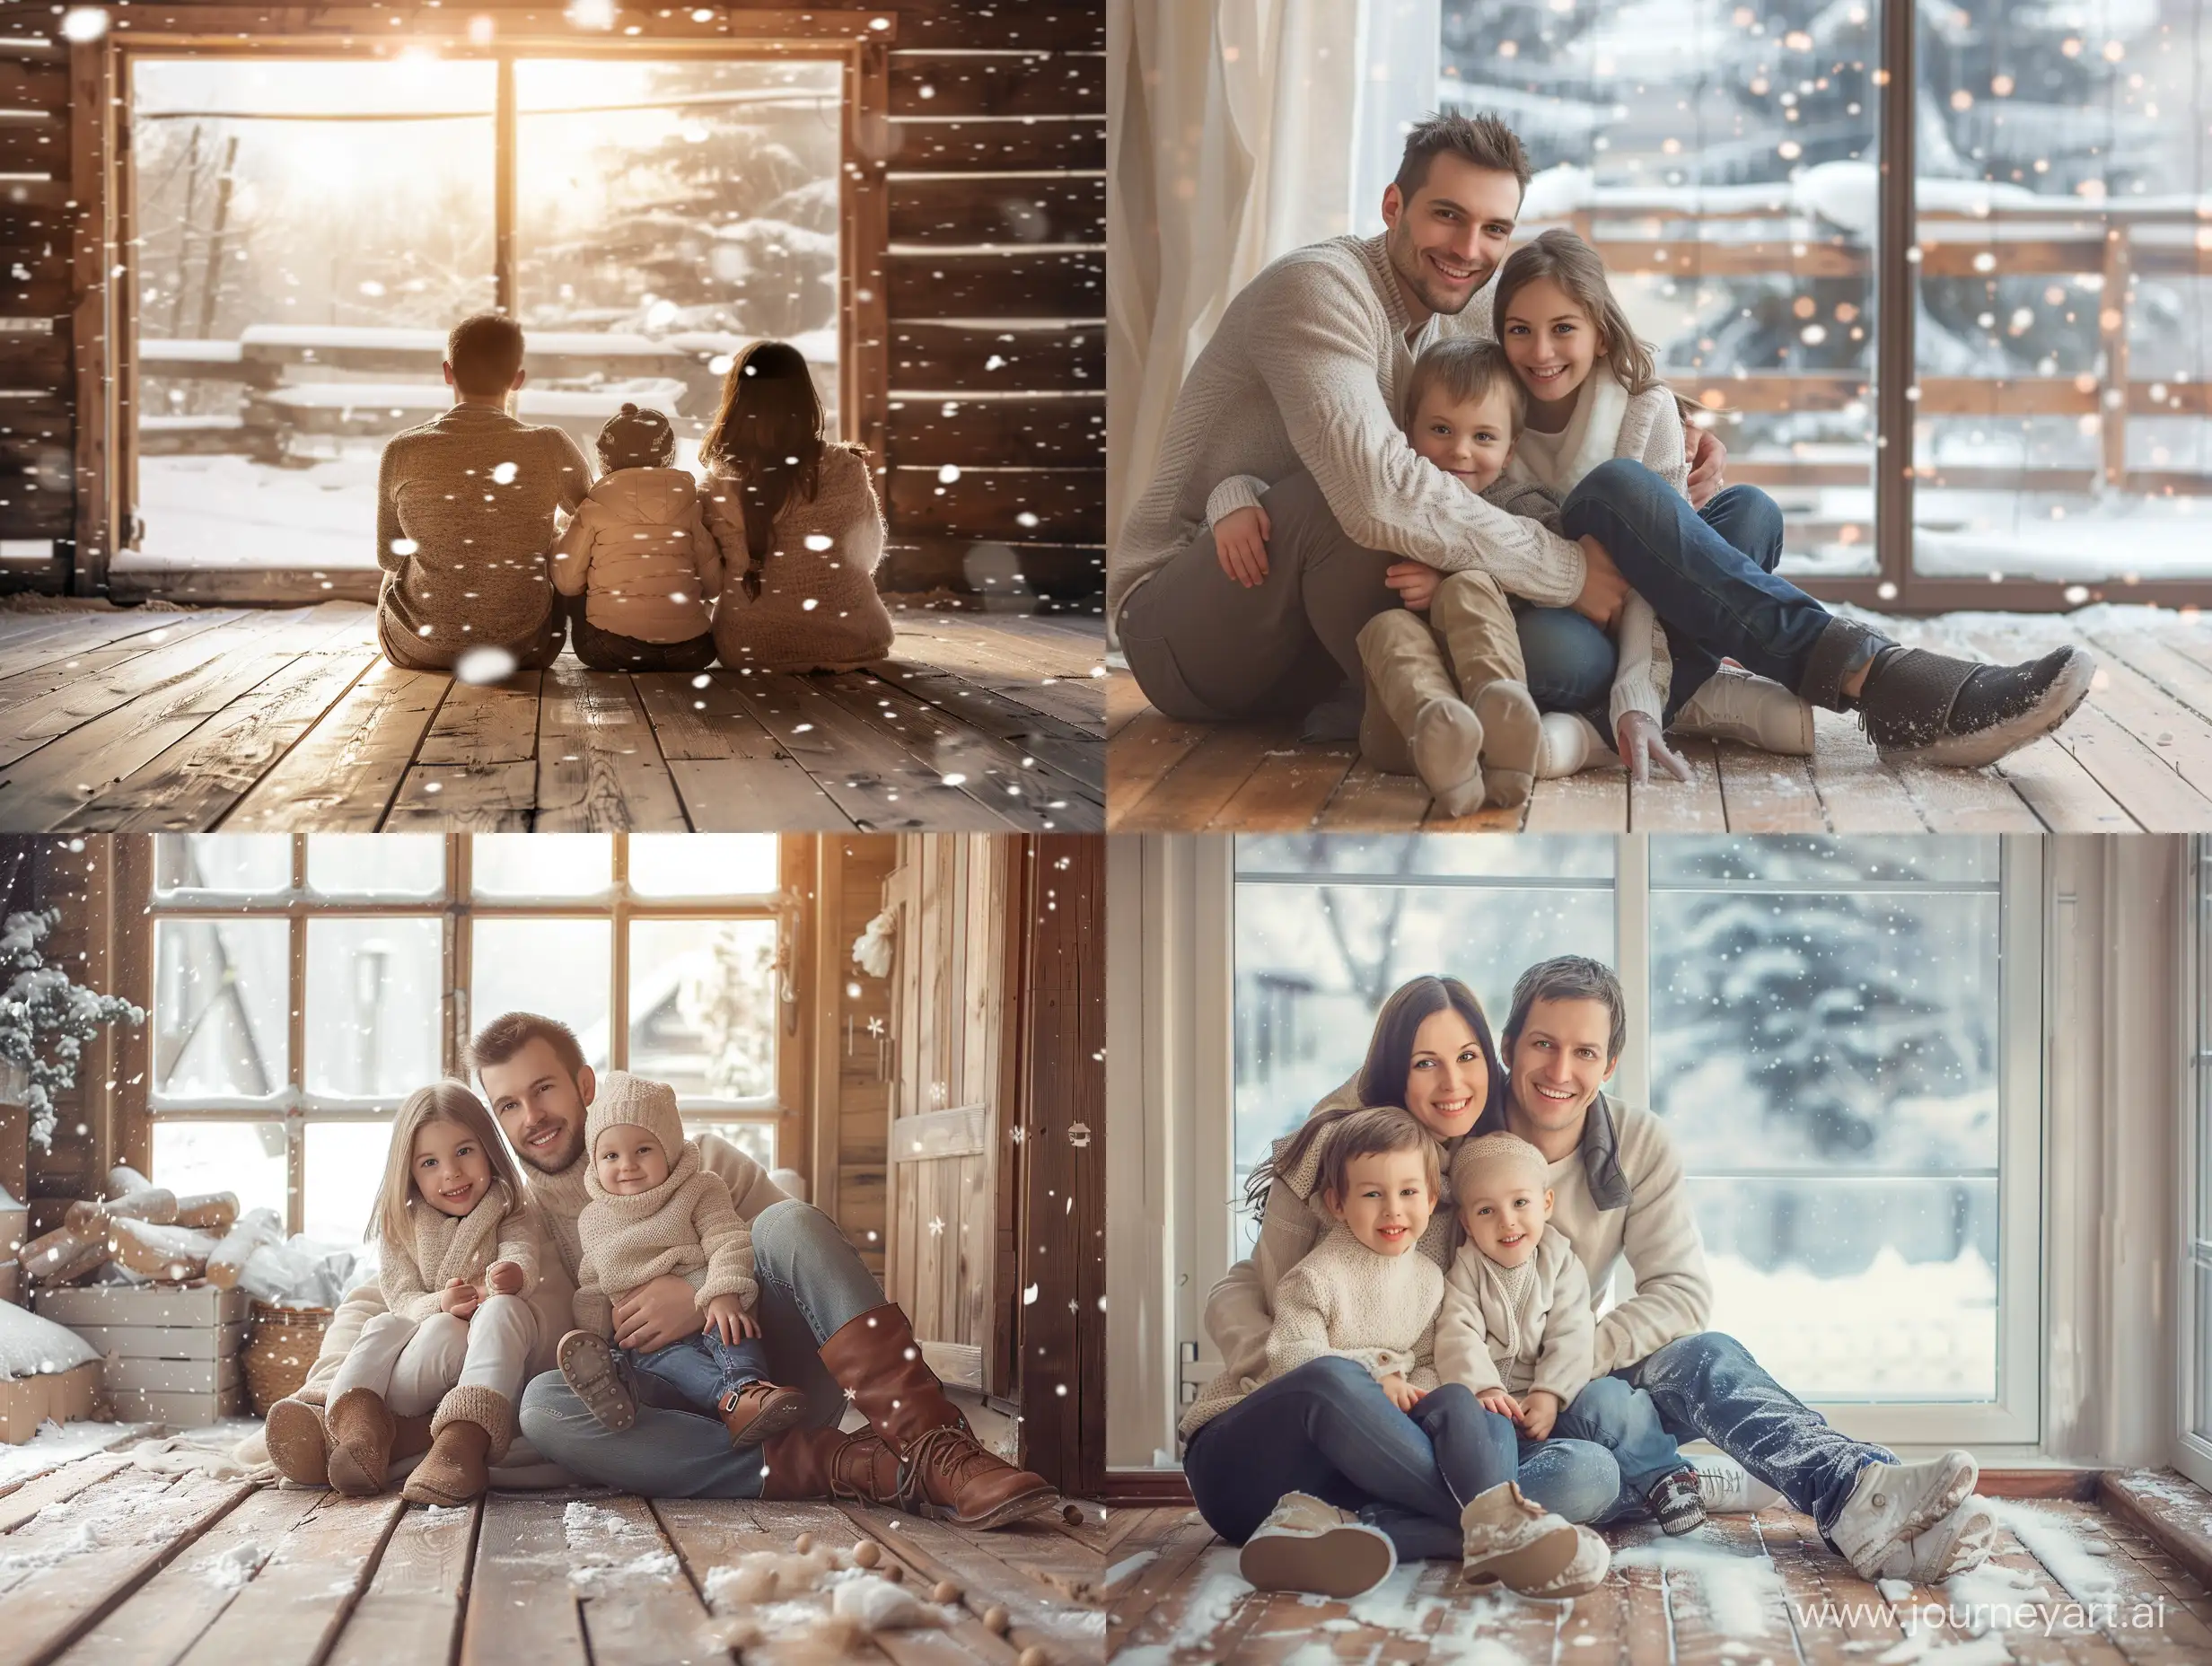 Joyful-Family-Enjoying-Snowfall-Inside-Cozy-Wooden-House